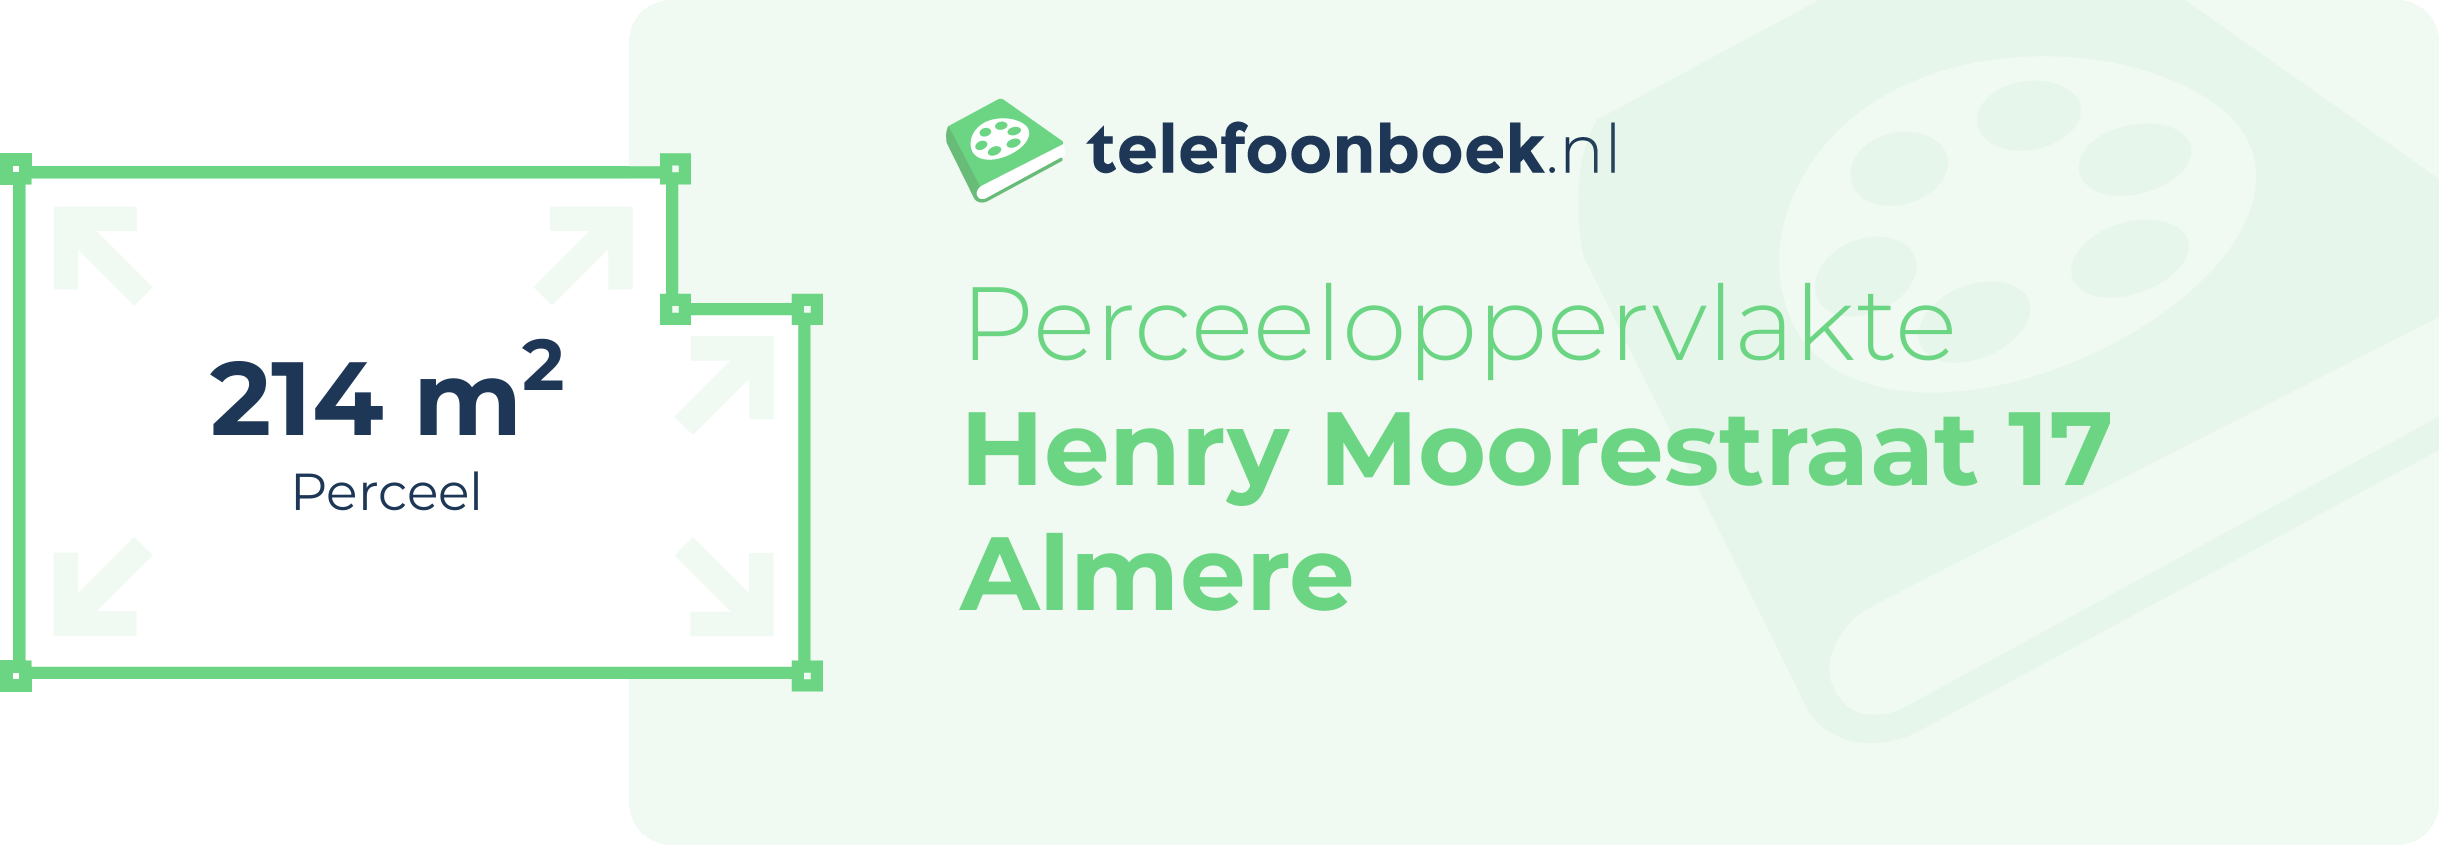 Perceeloppervlakte Henry Moorestraat 17 Almere